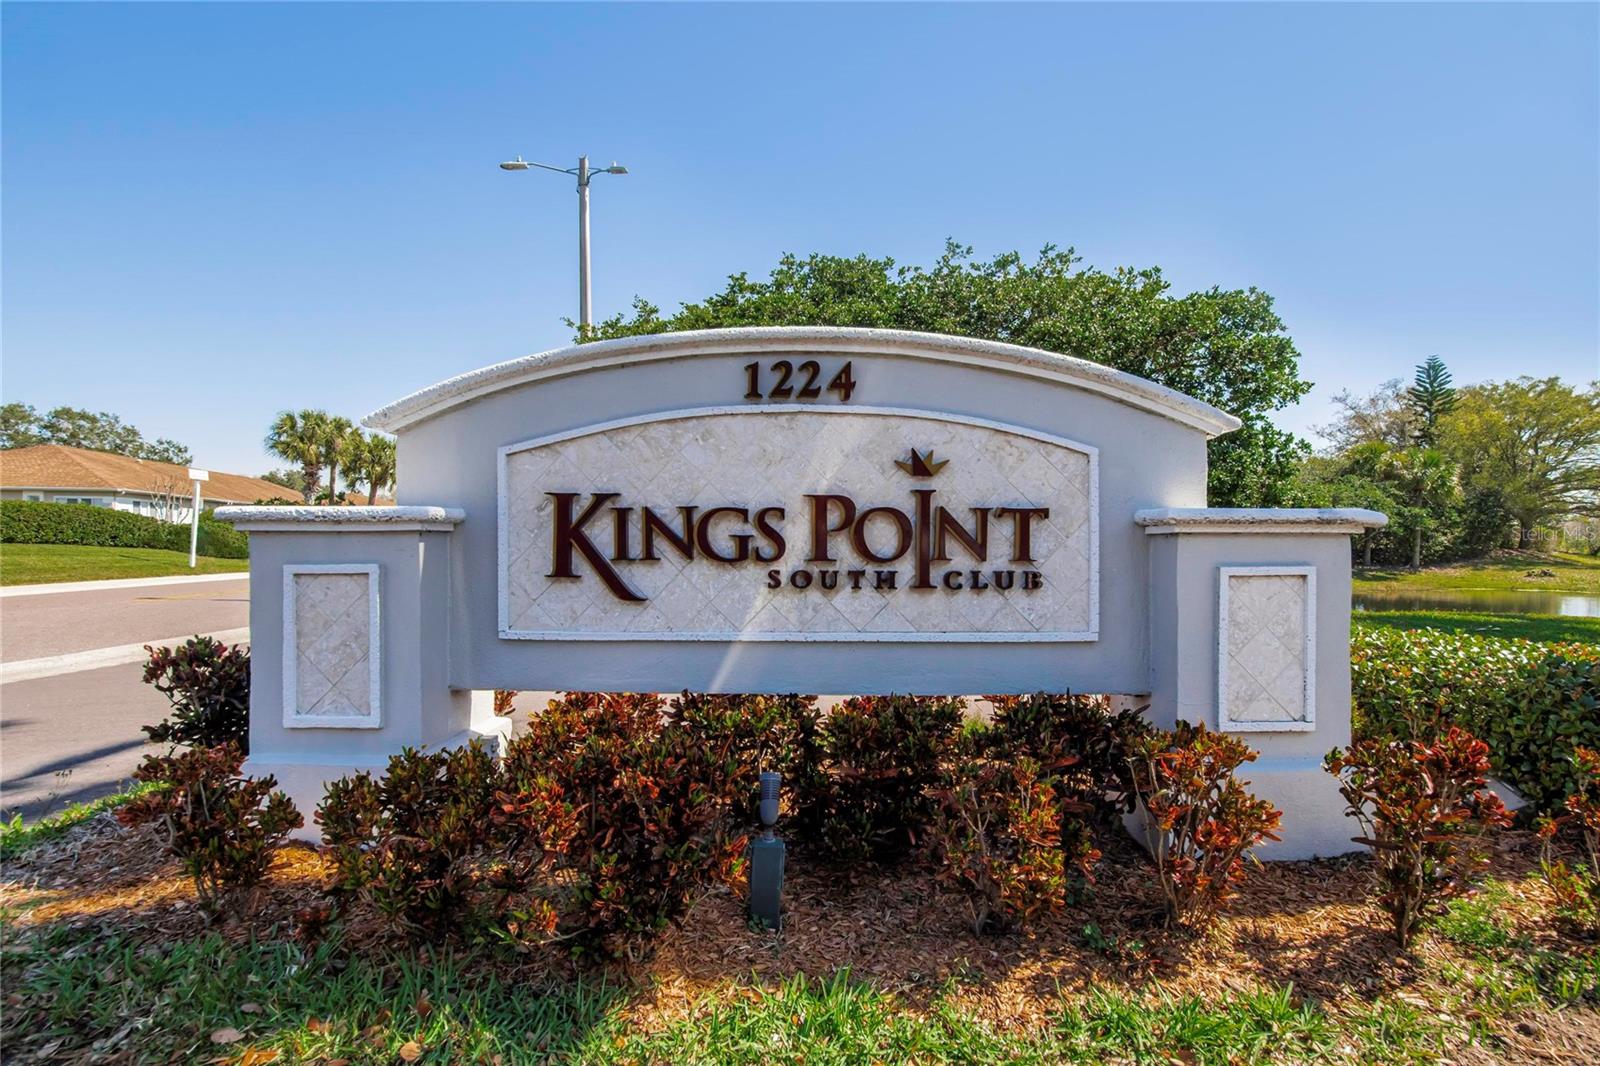 Kings Point Community Entrance